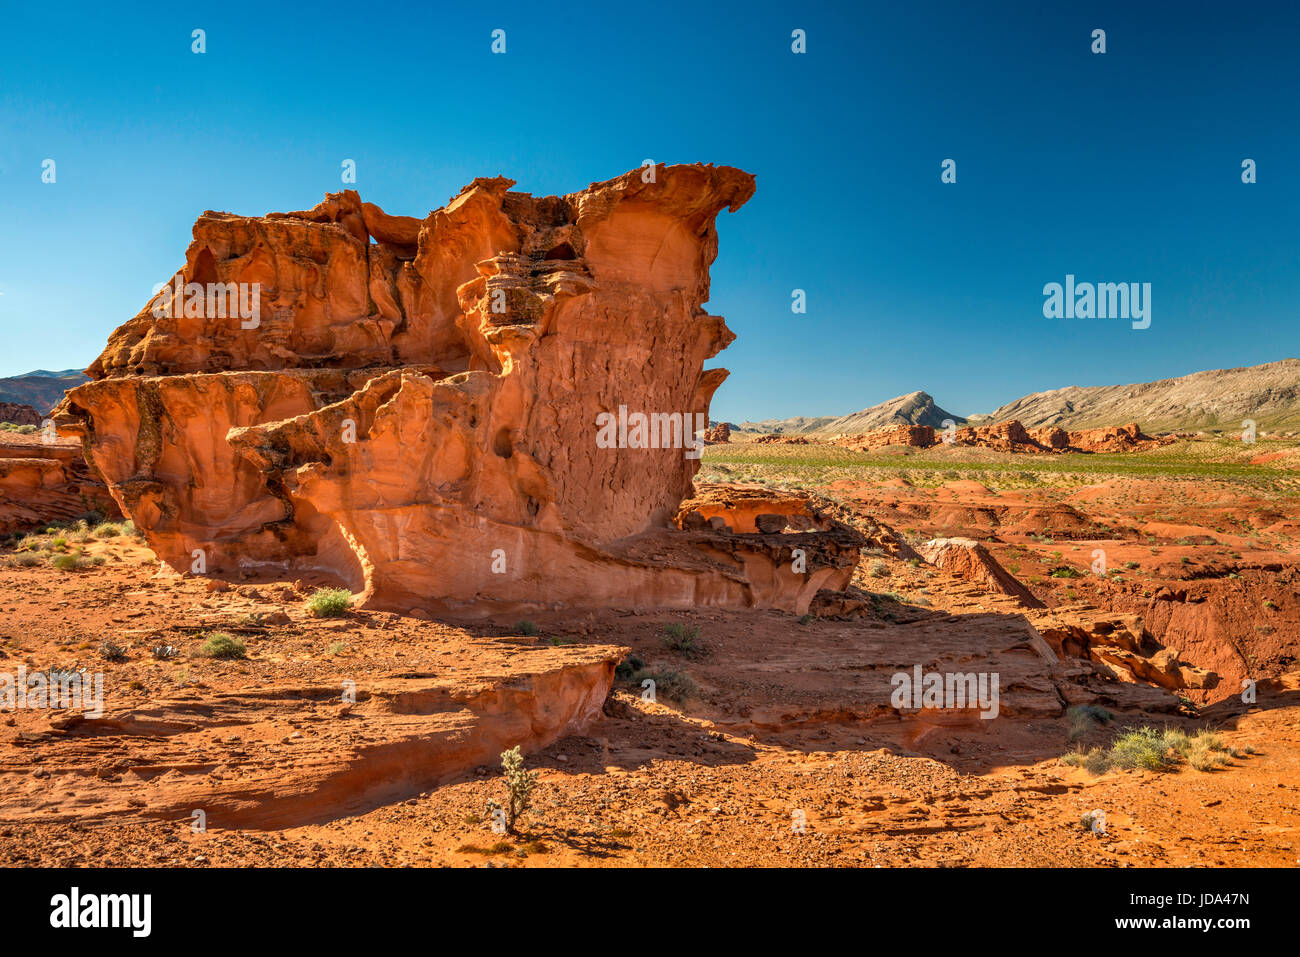 Eroded red Jurassic sandstone rocks, fossil sand dunes, in Little Finland area, Gold Butte National Monument, Mojave Desert, Nevada, USA Stock Photo